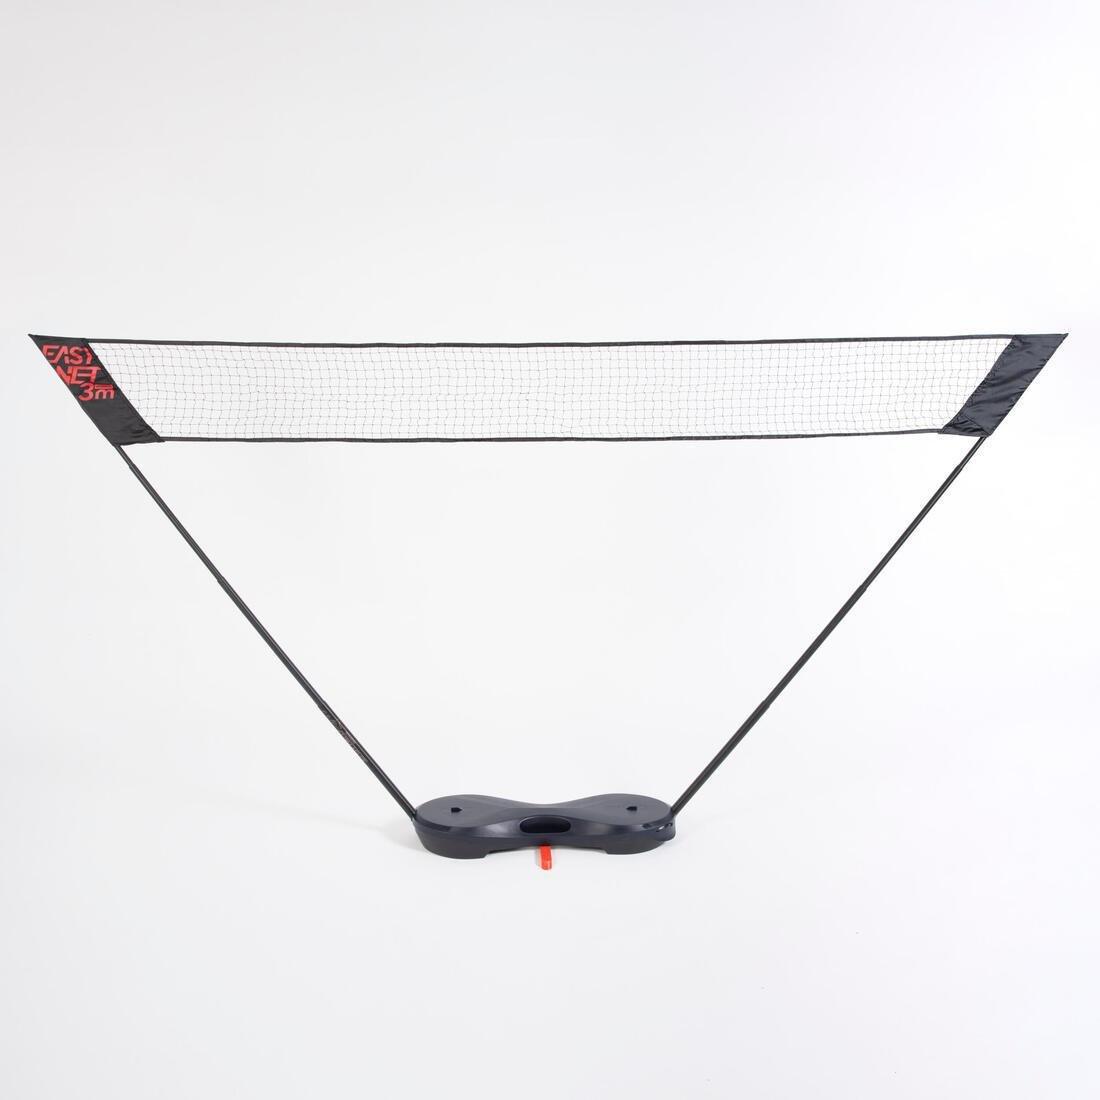 PERFLY - 3 M Badminton Easy Net, Black